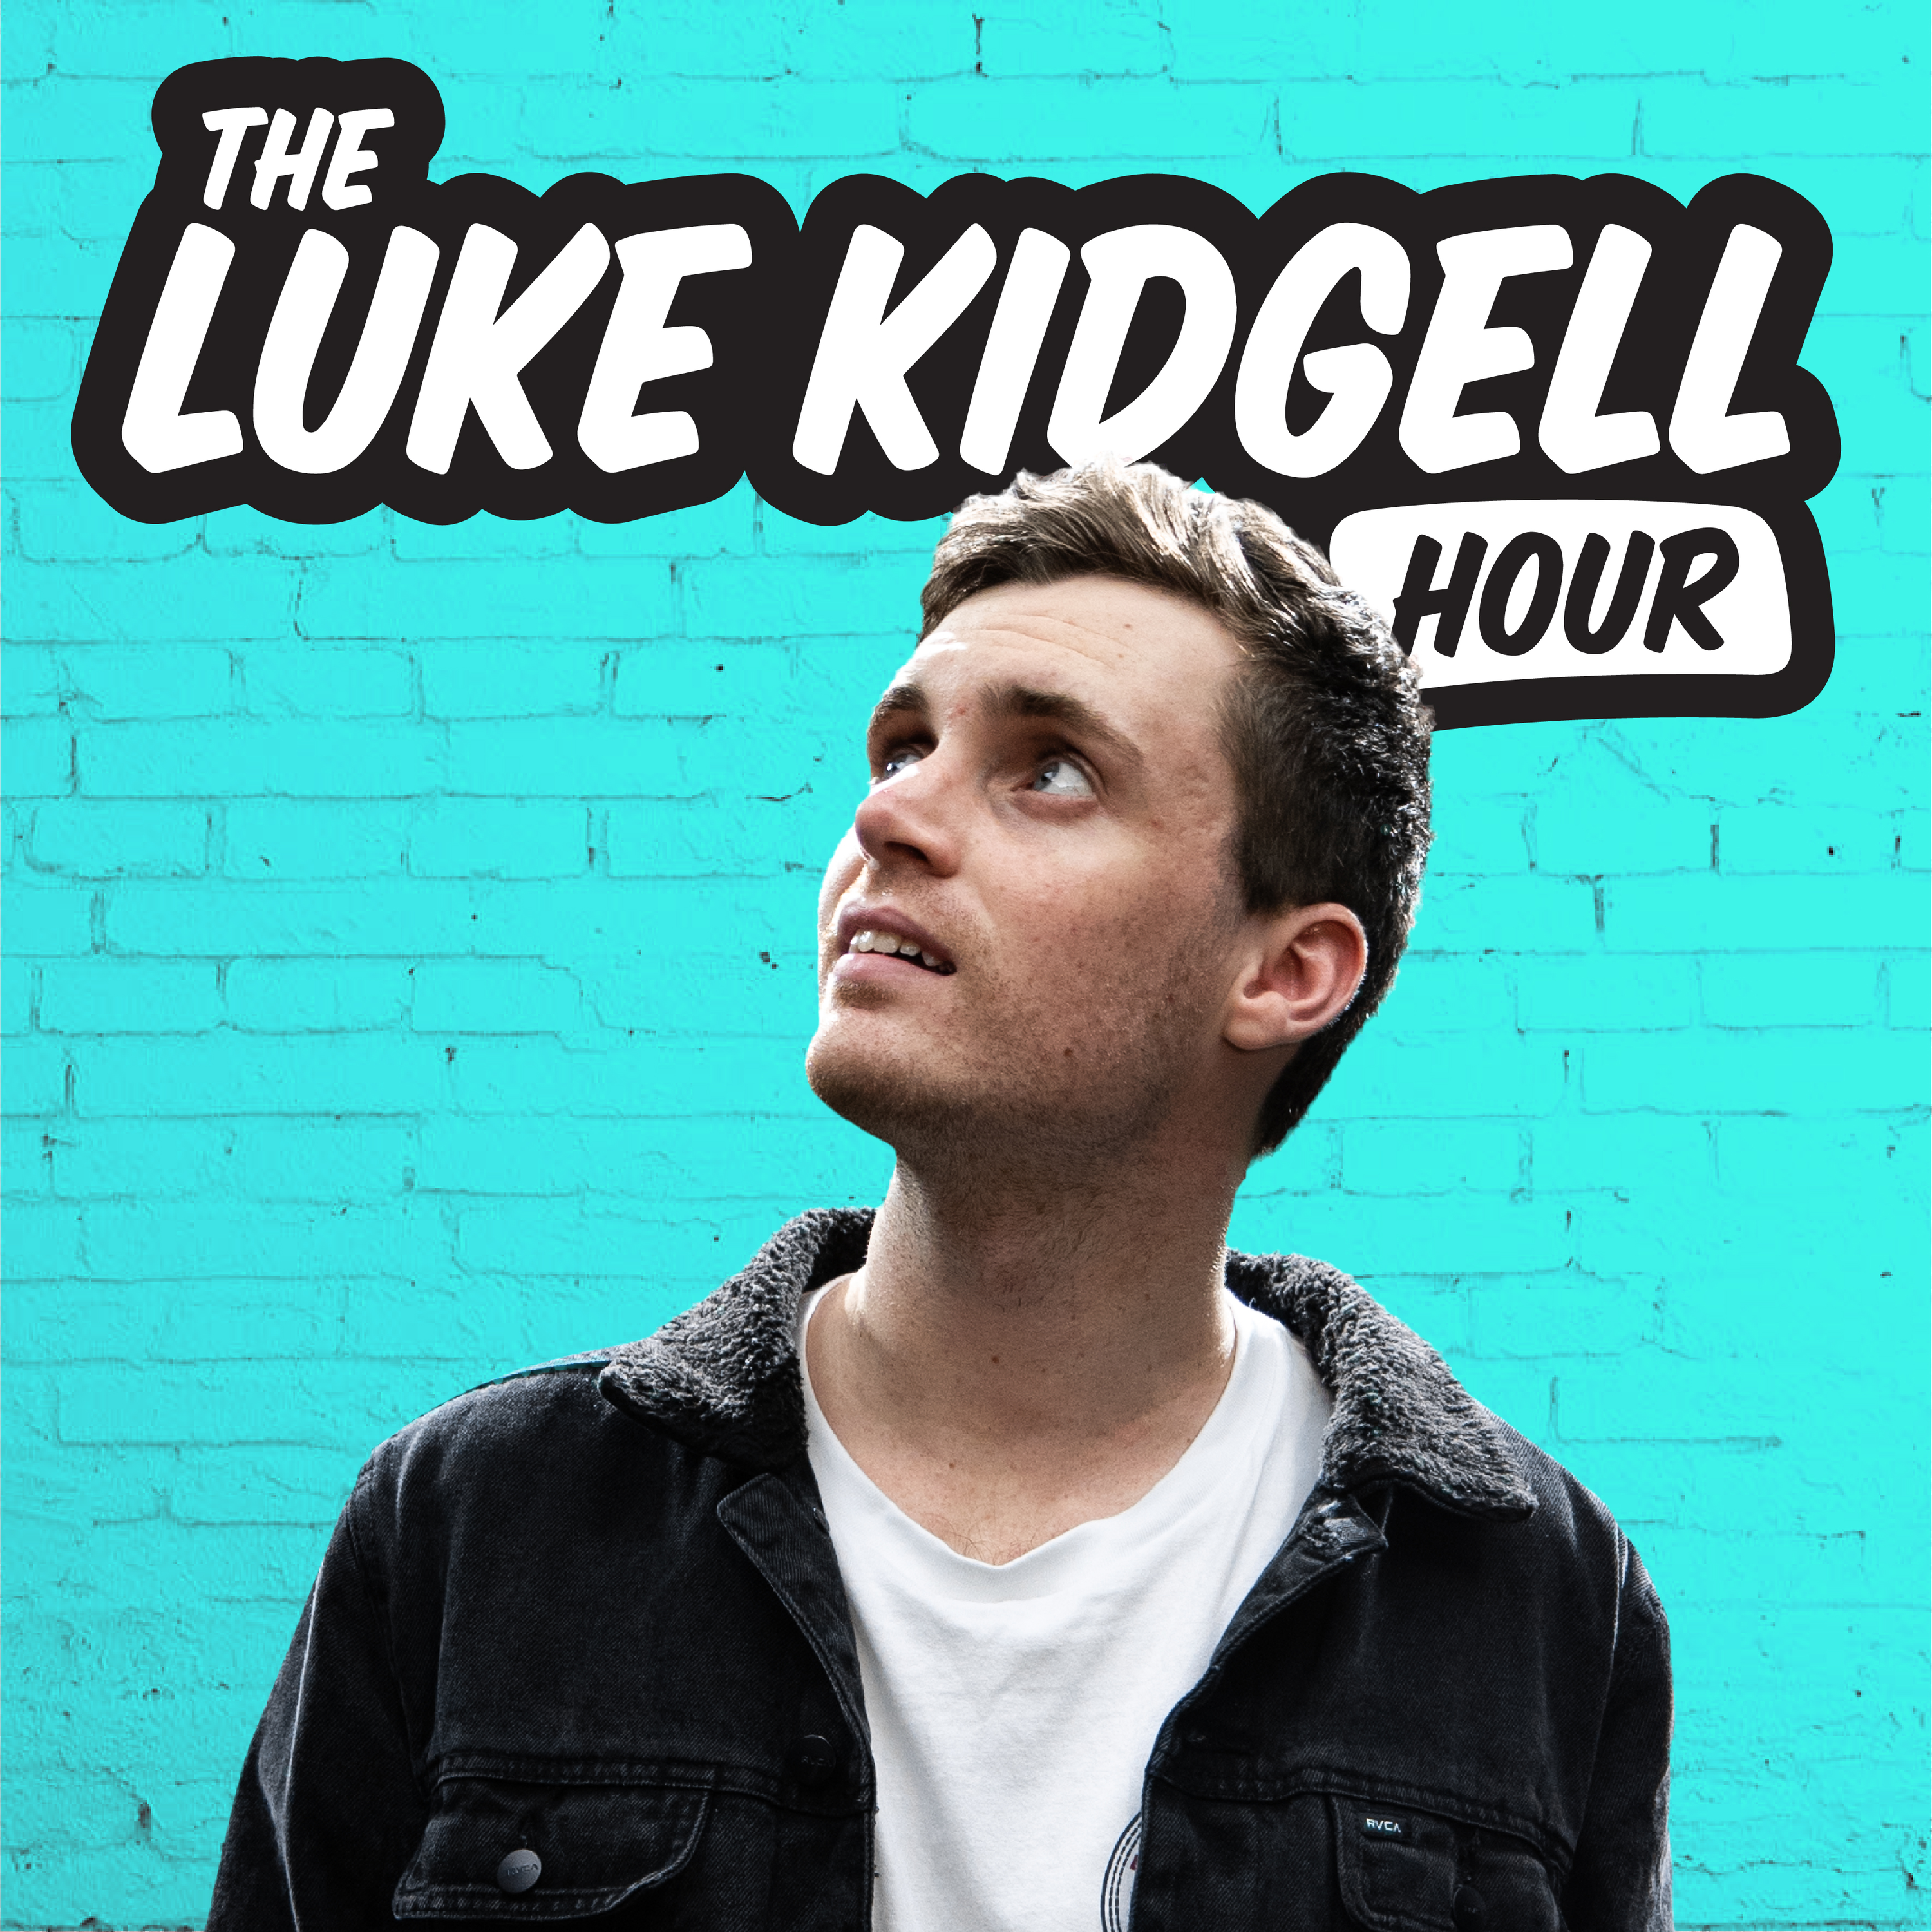 The Luke Kidgell Hour